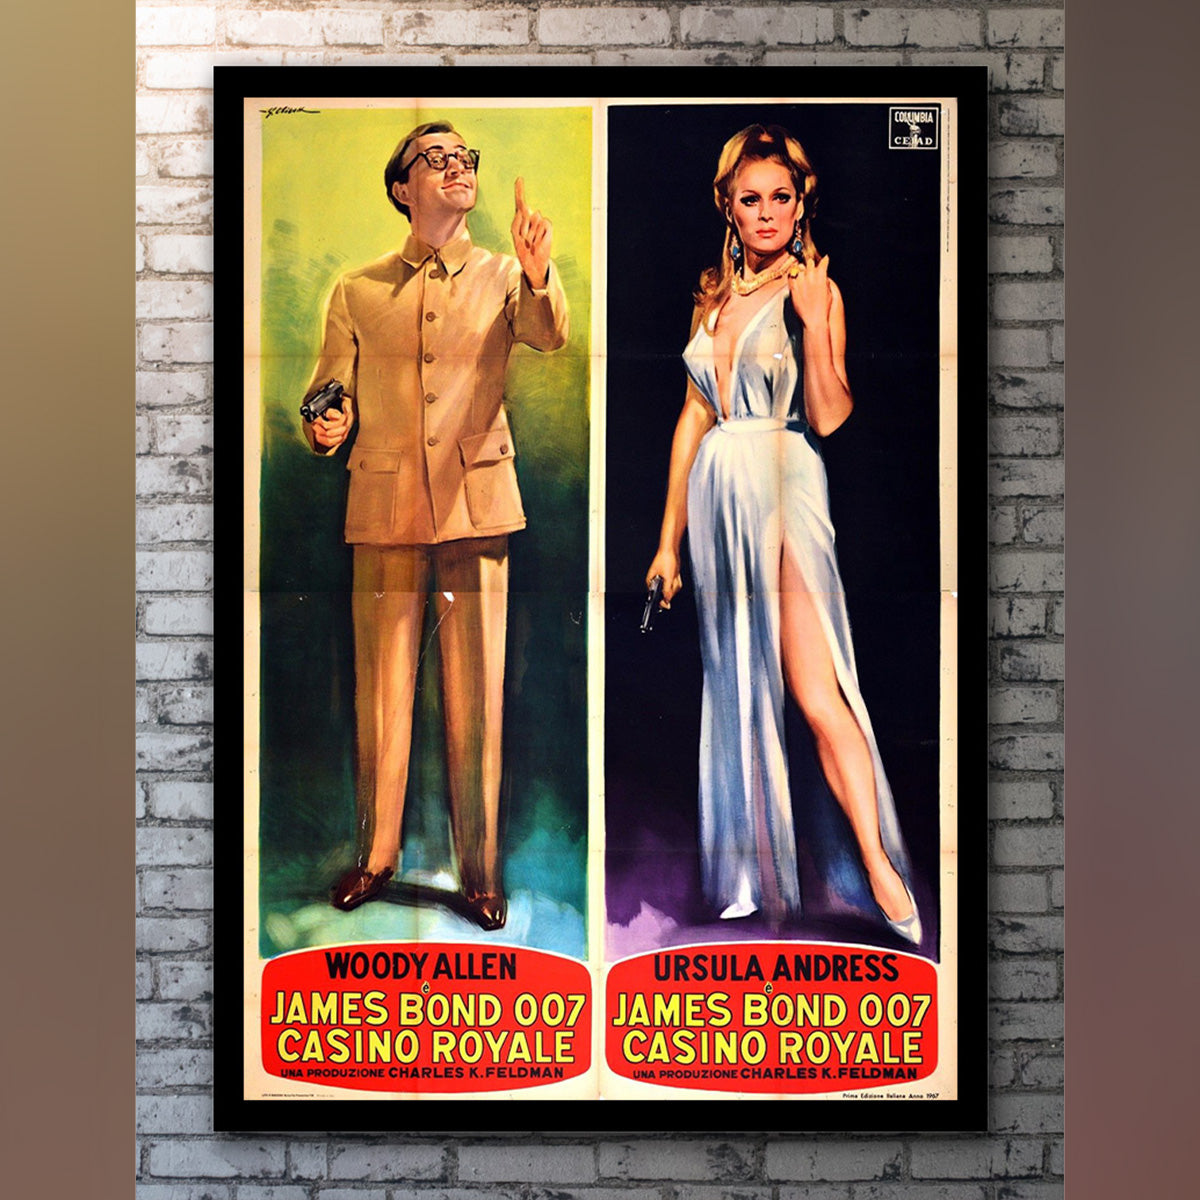 Original Movie Poster of Casino Royale (1967)